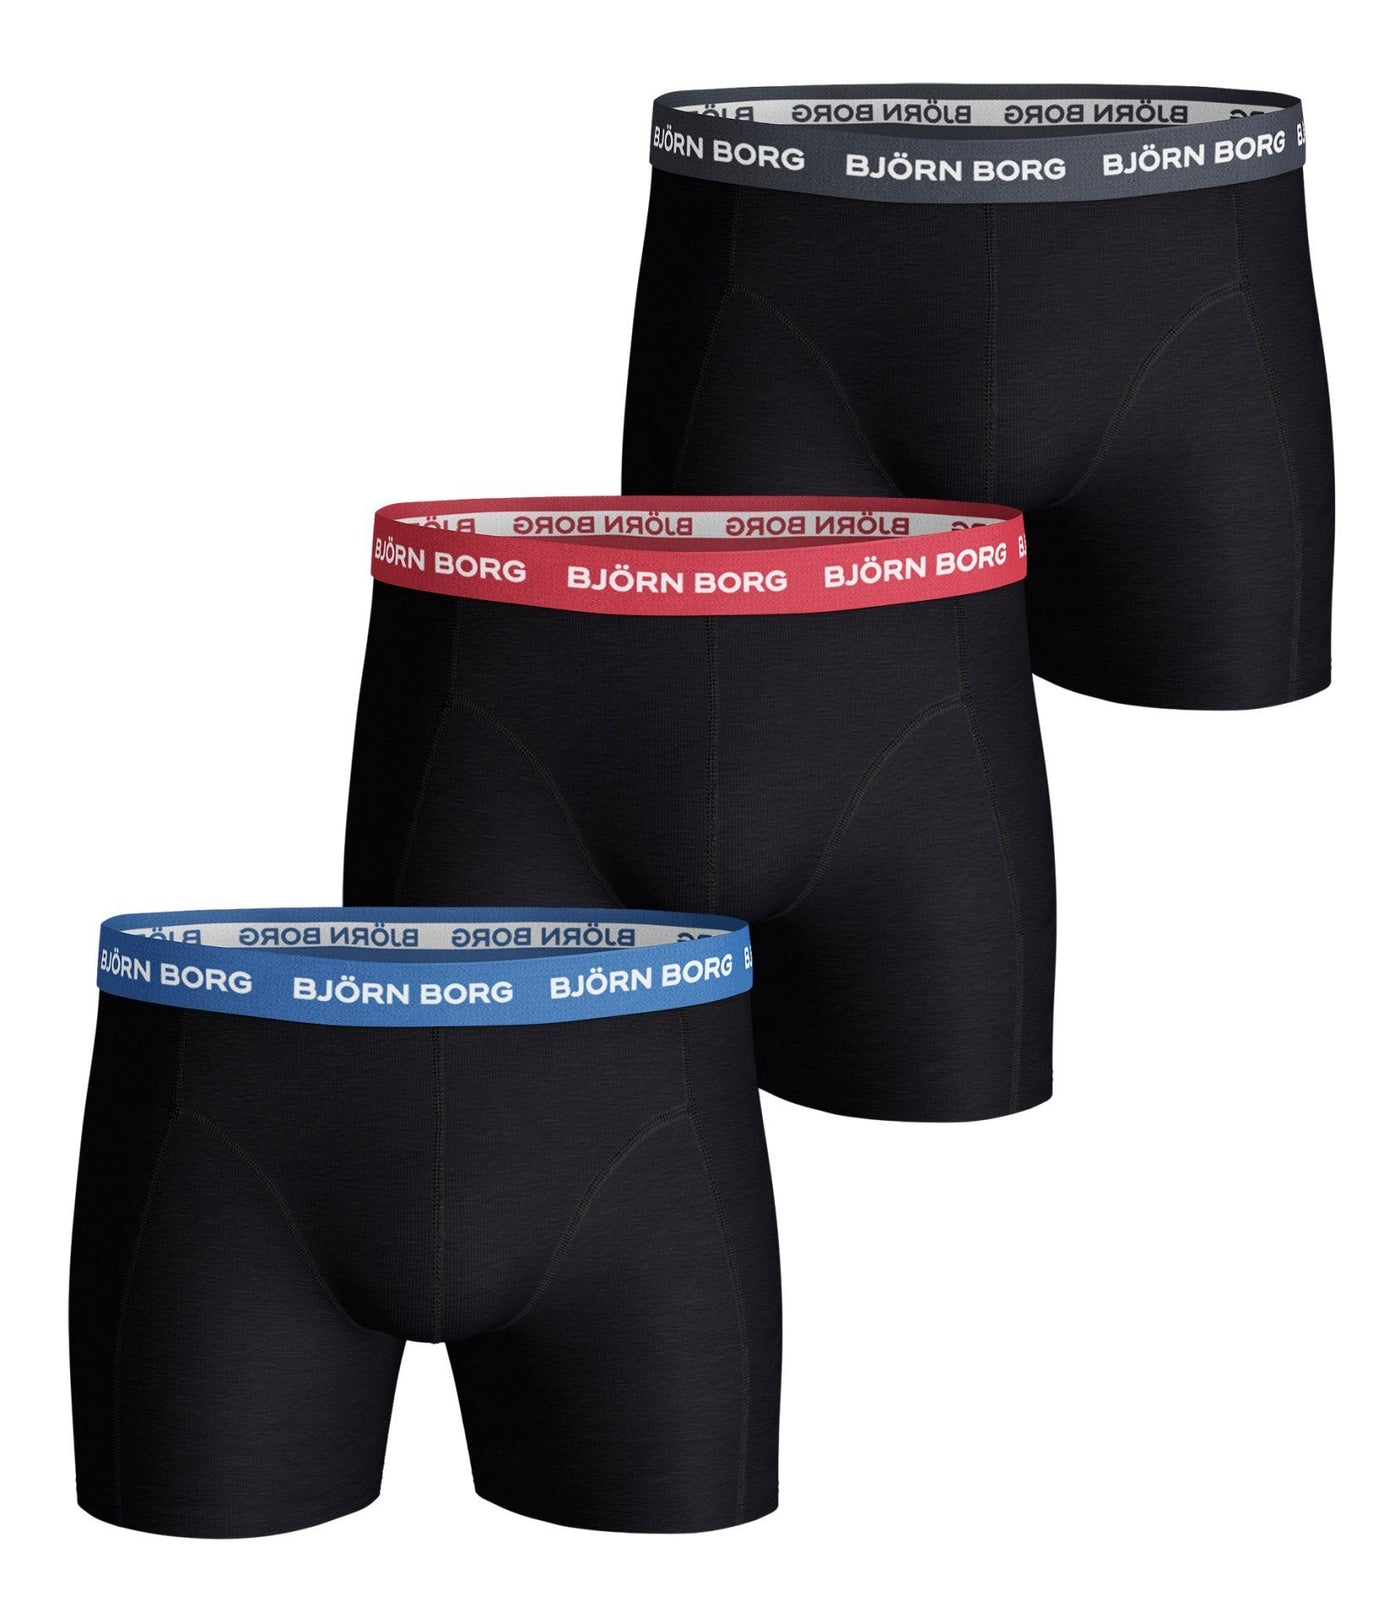 BJORN BORG Multipack of 3 Boxer Shorts Men's Cotton Underwear Black - Activemen Clothing